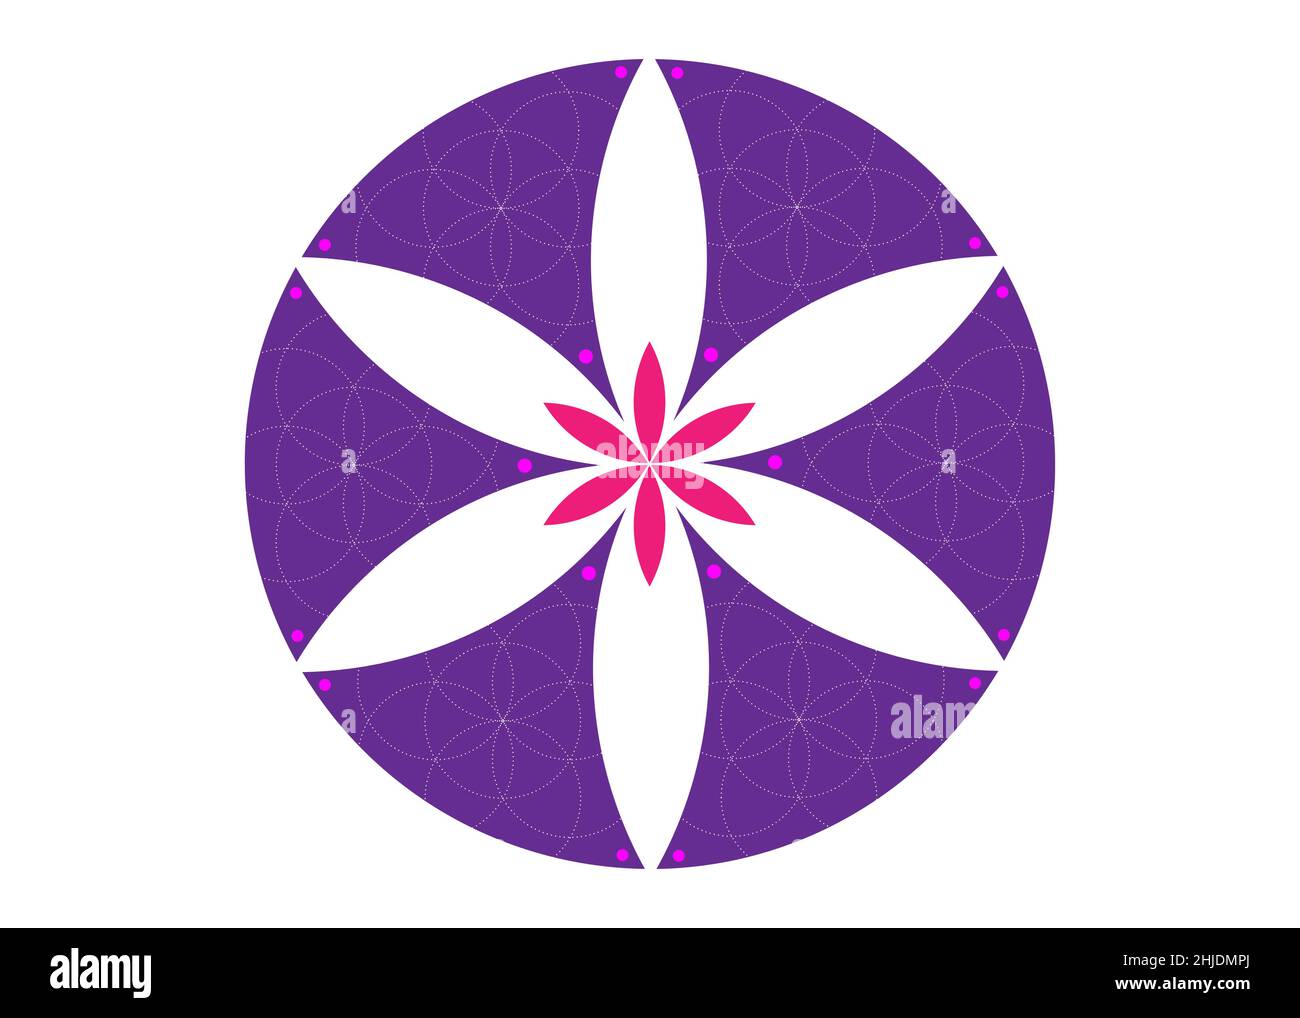 Seed Flower of life lotus icon, purple mandala sacred geometry, yantra symbol of harmony and balance. Mystical talisman, logo sign vector isolated Stock Vector